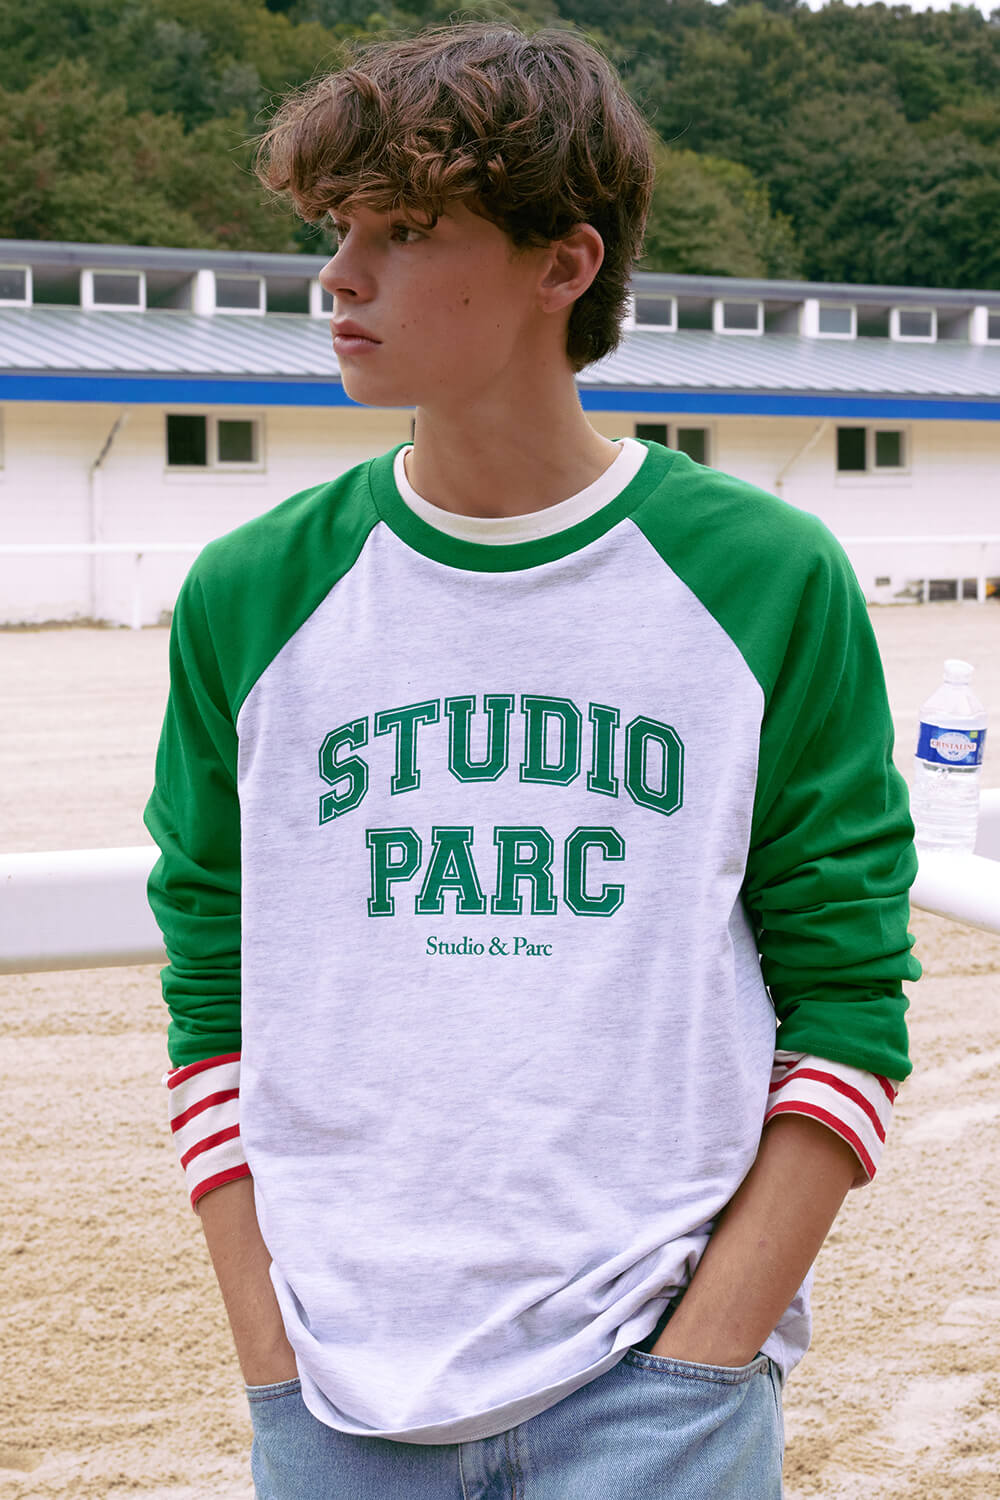 (UNI) Studio Parc Raglan Long Sleeve T-Shirt_Green